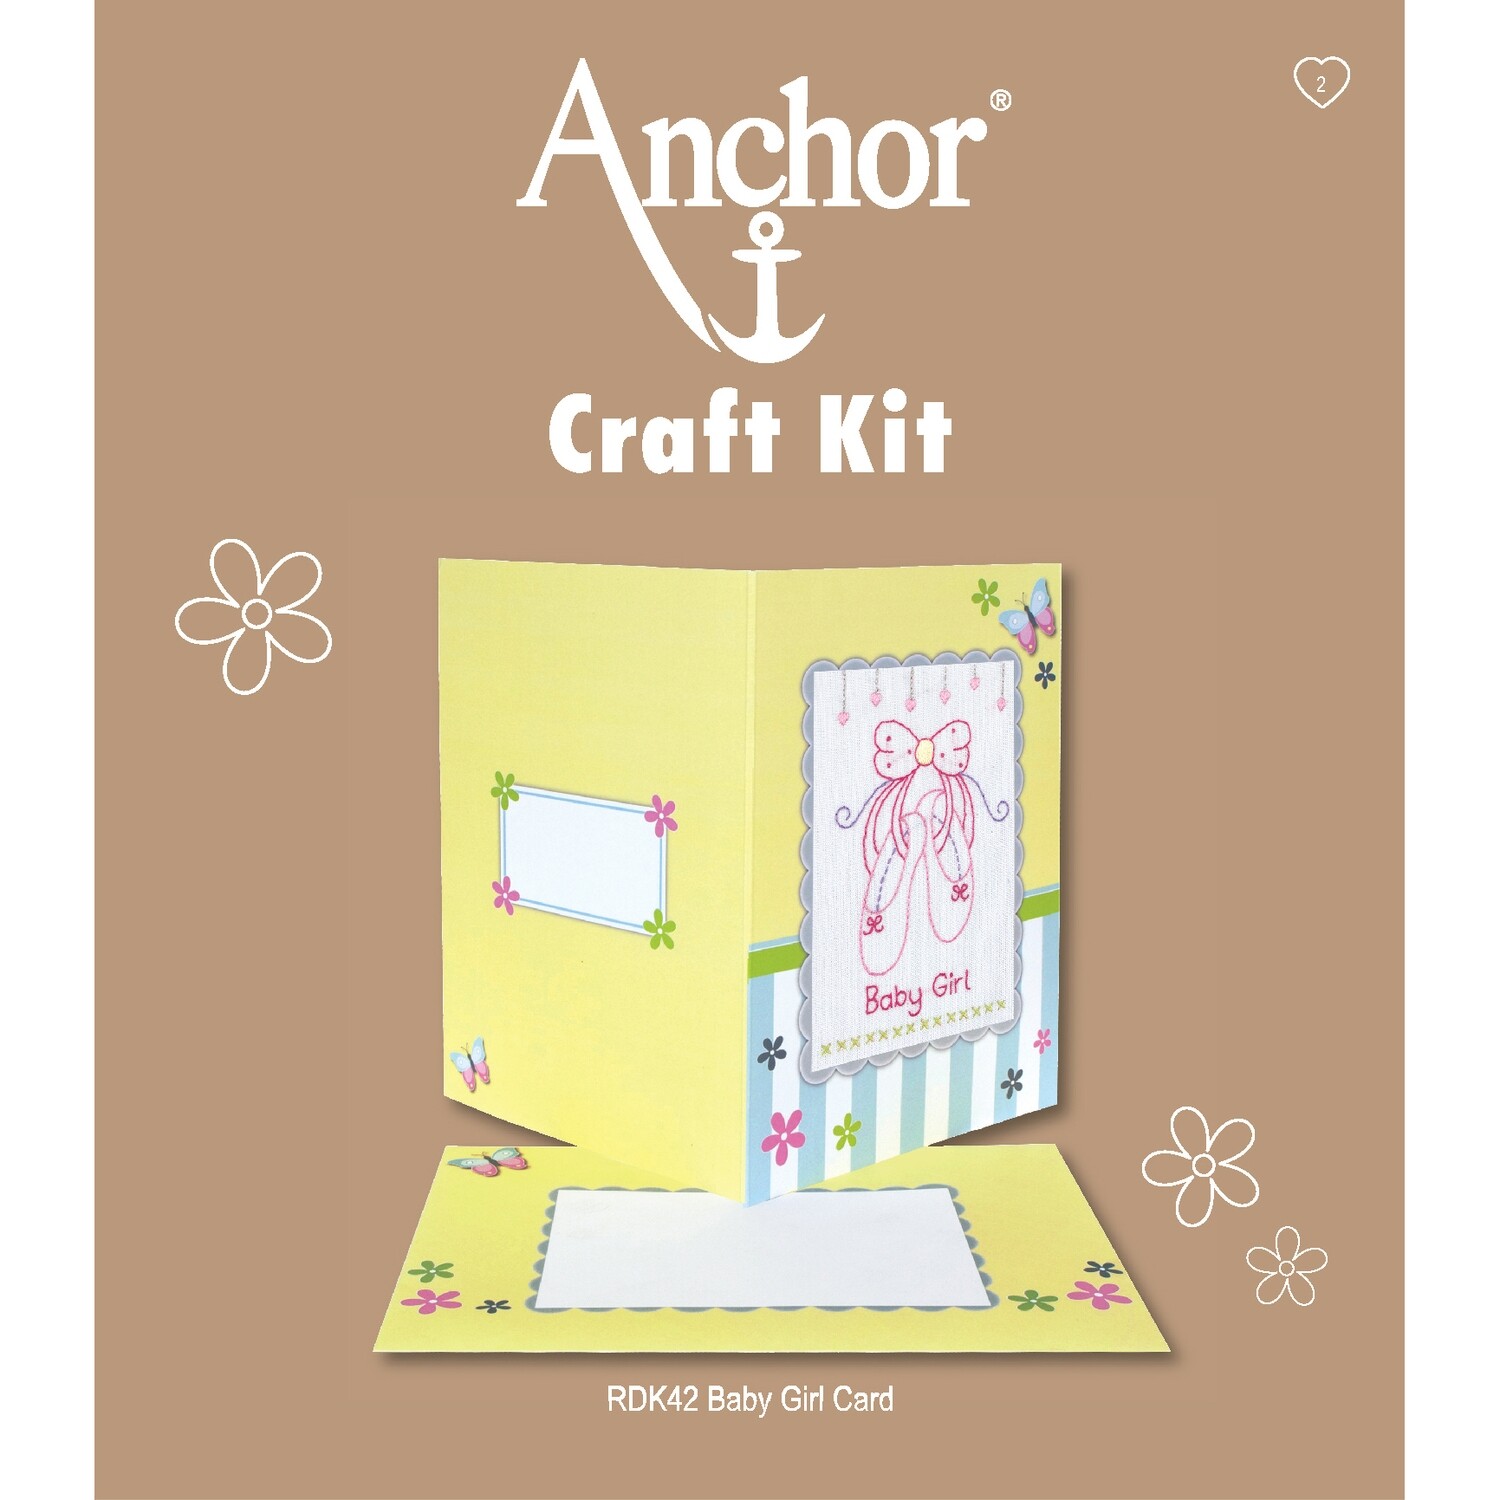 Anchor Craft Kit - Baby Girl Card